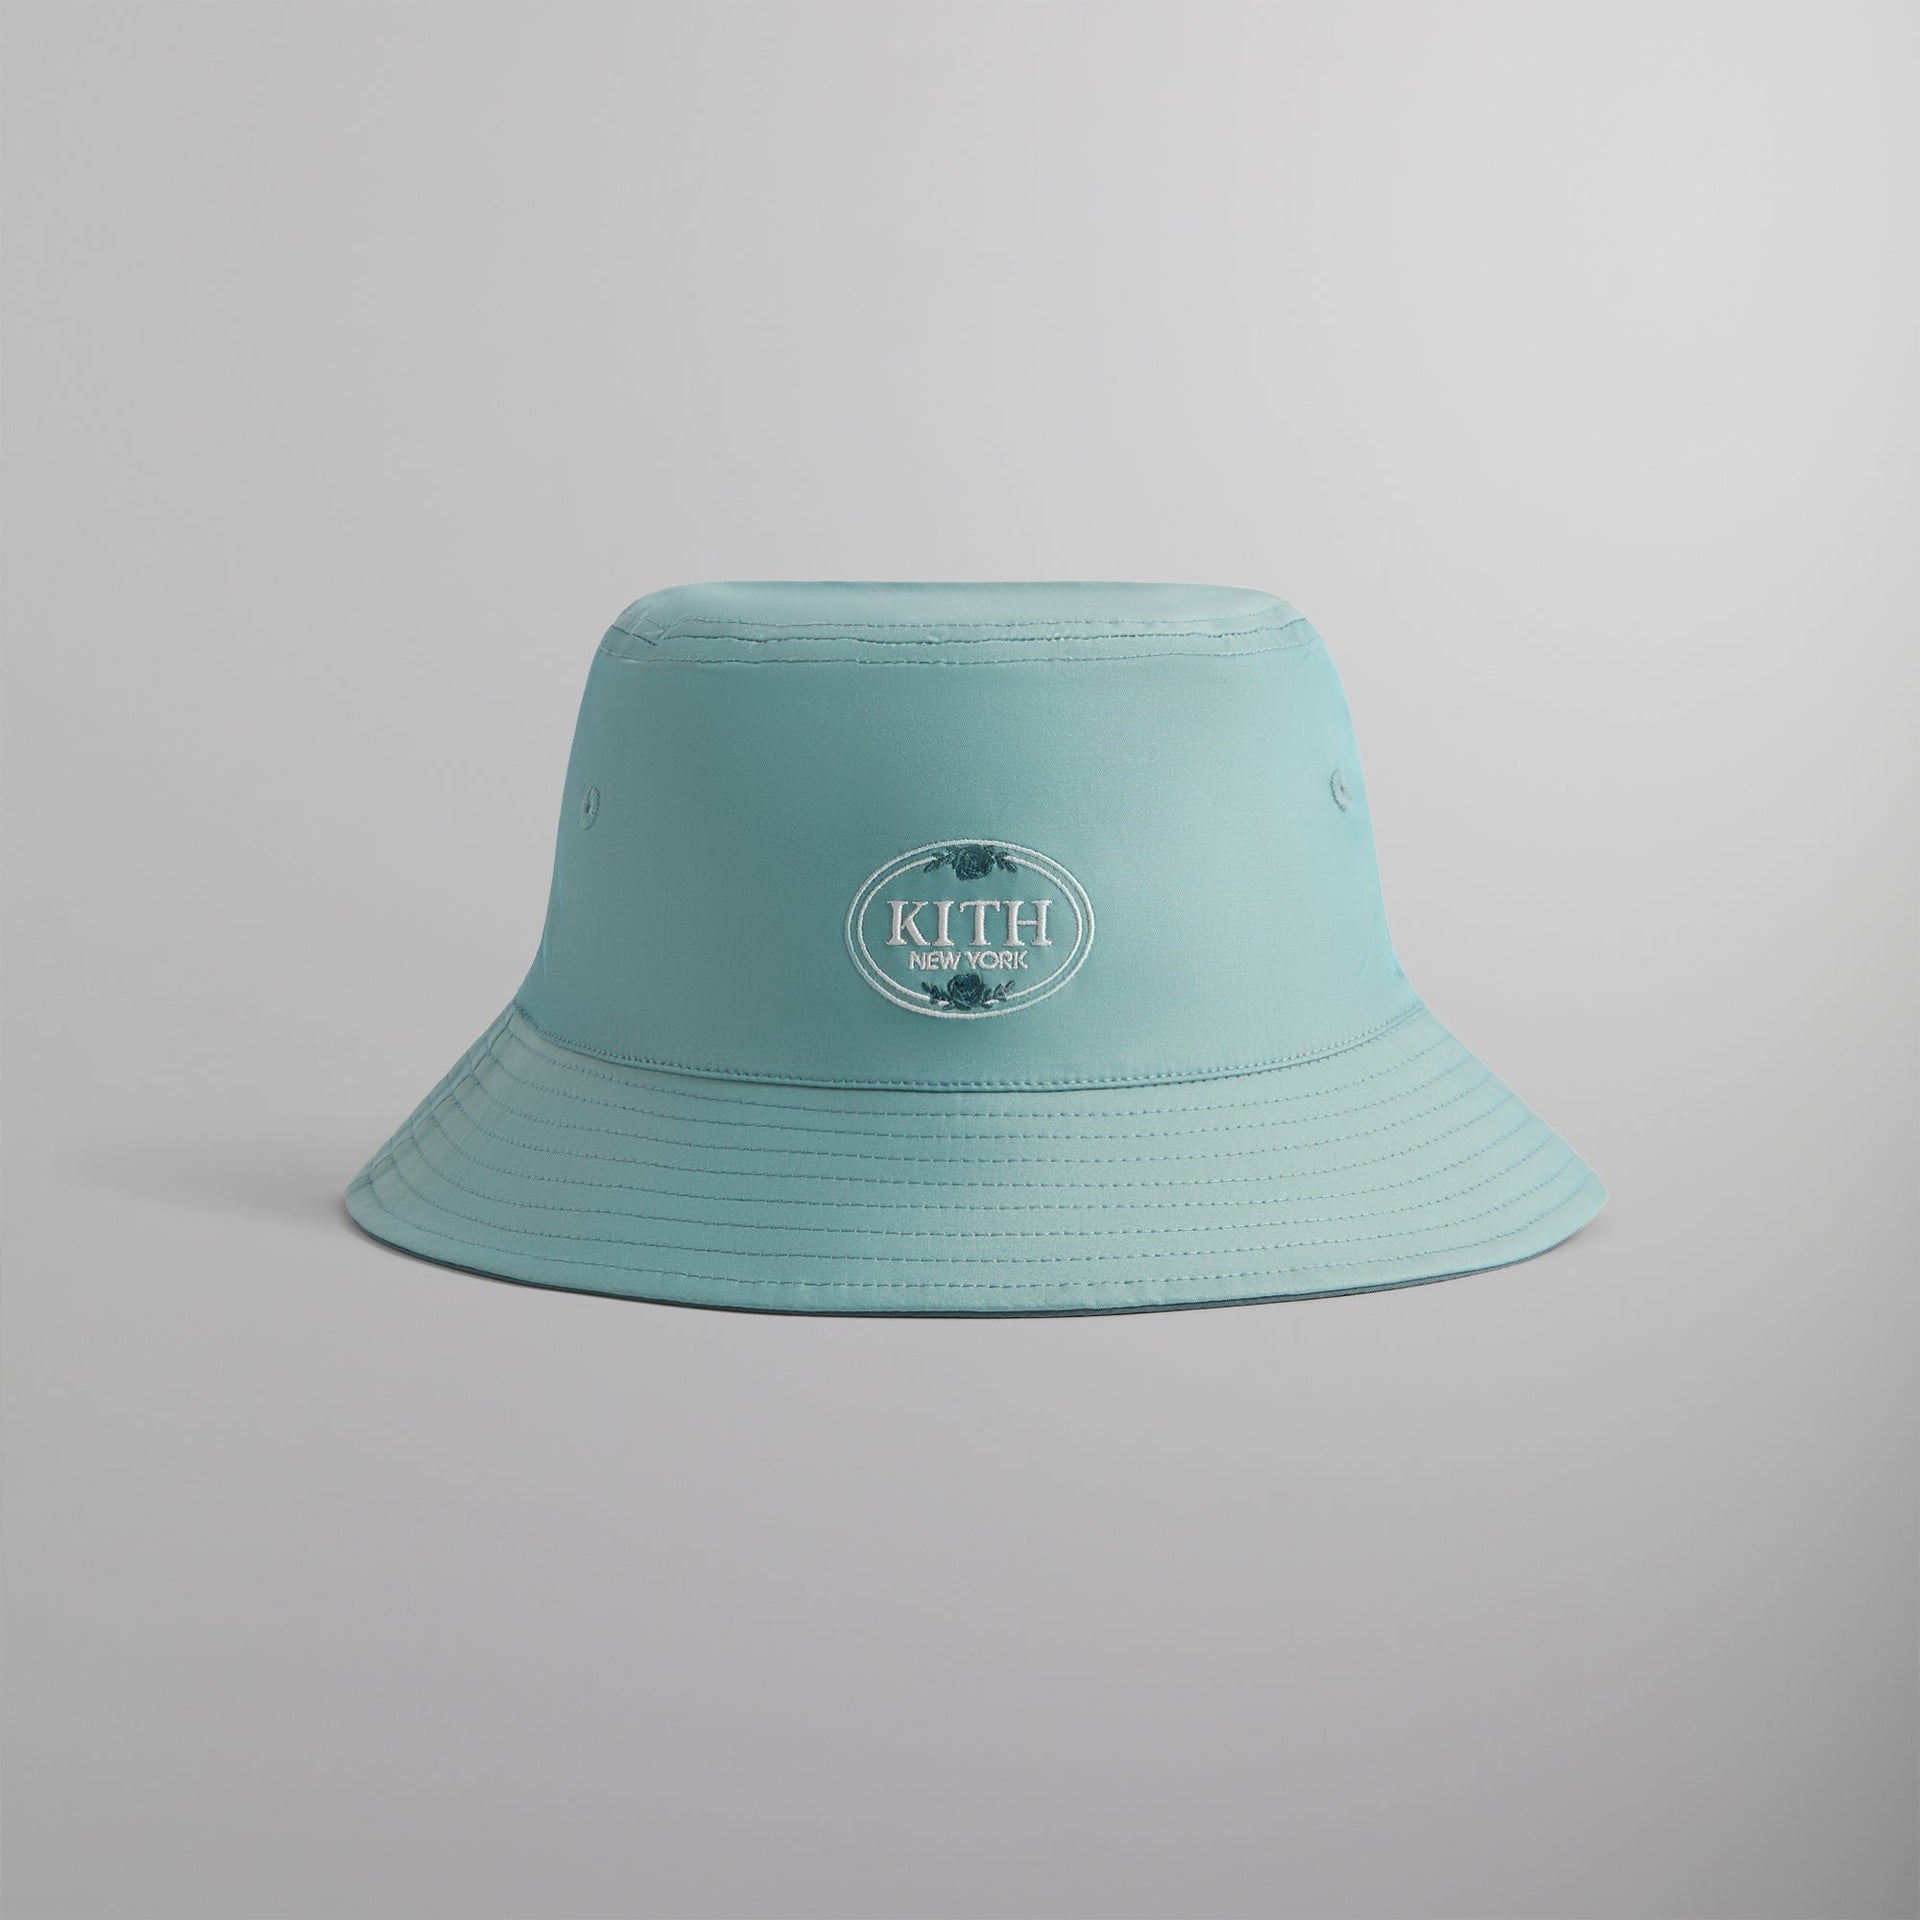 Kith Nylon Twill Dawson Reversible Bucket Hat - System PH